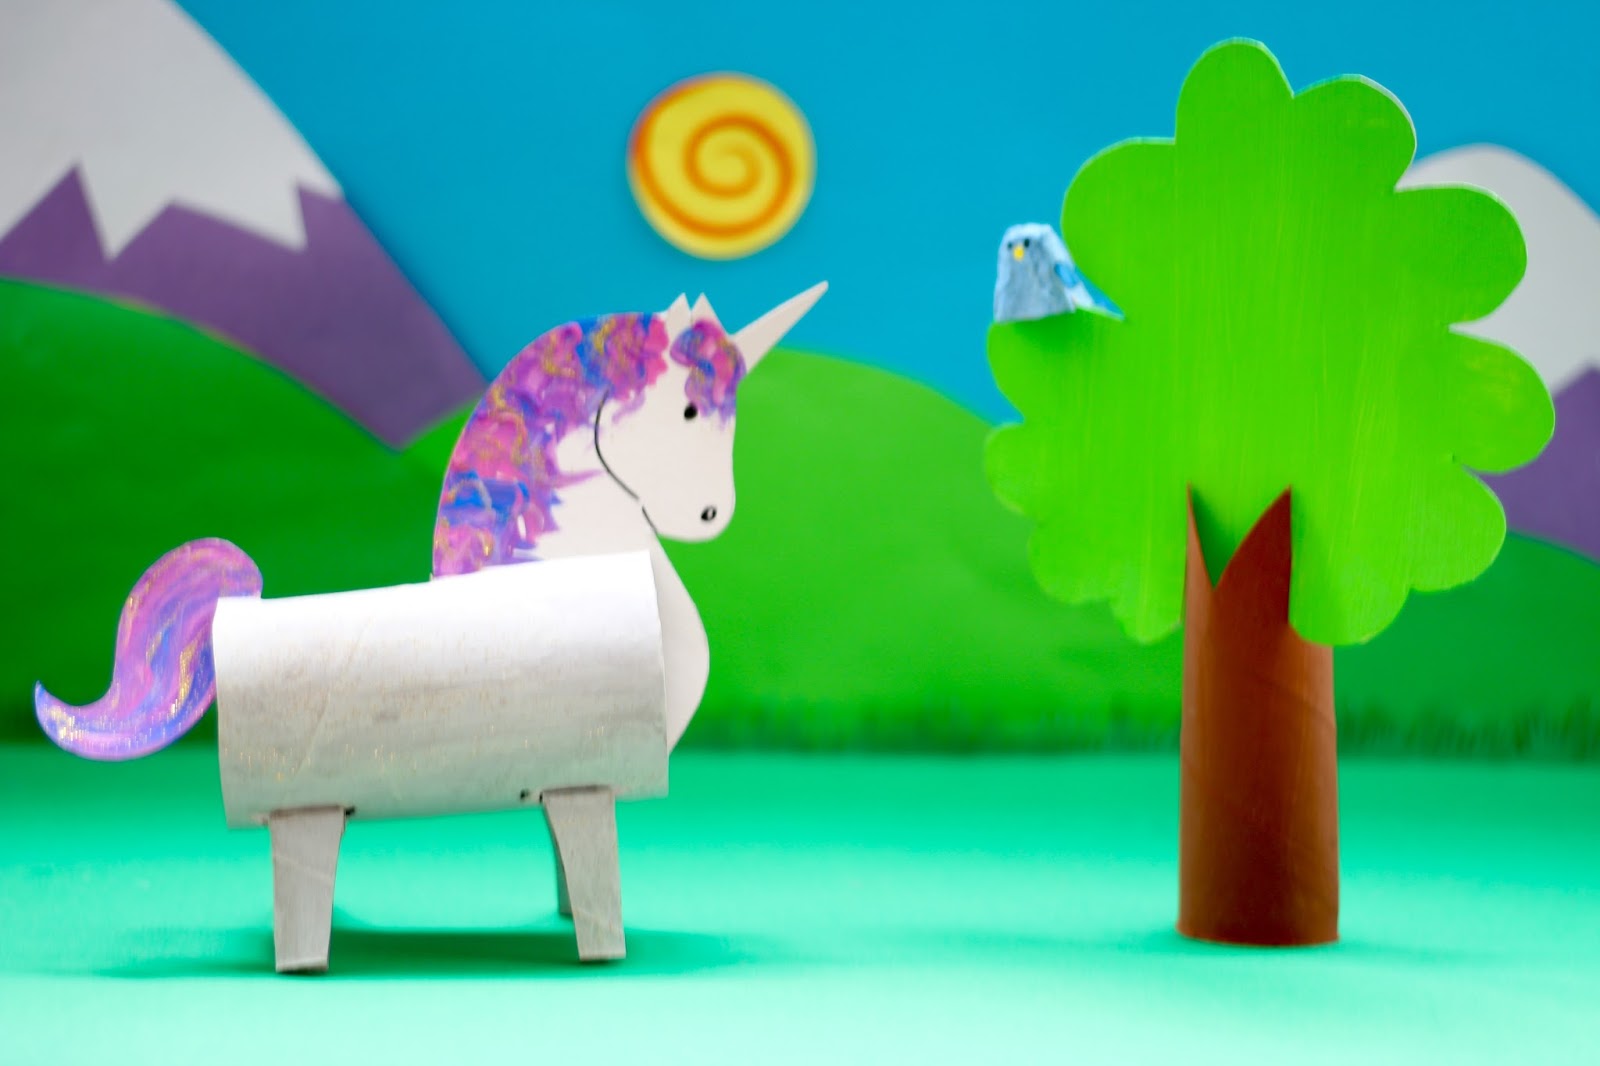 Jumble Tree: Make a paper roll unicorn